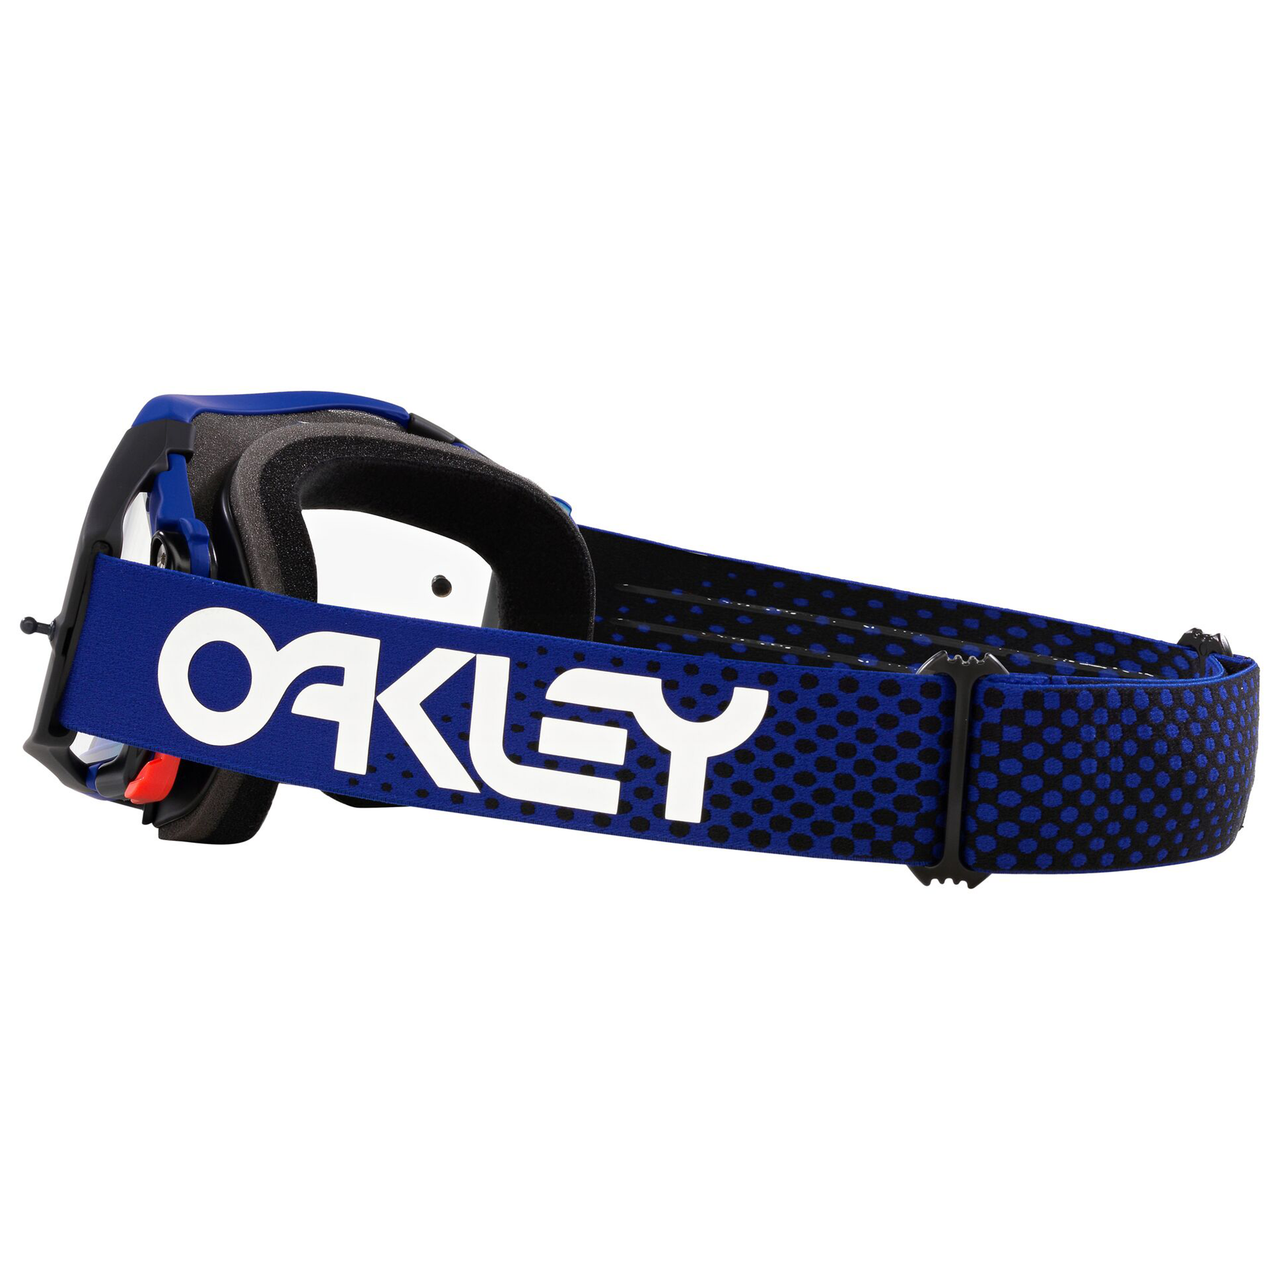 Oakley Airbrake MX Goggle Moto Blue 2 - Clear Lens